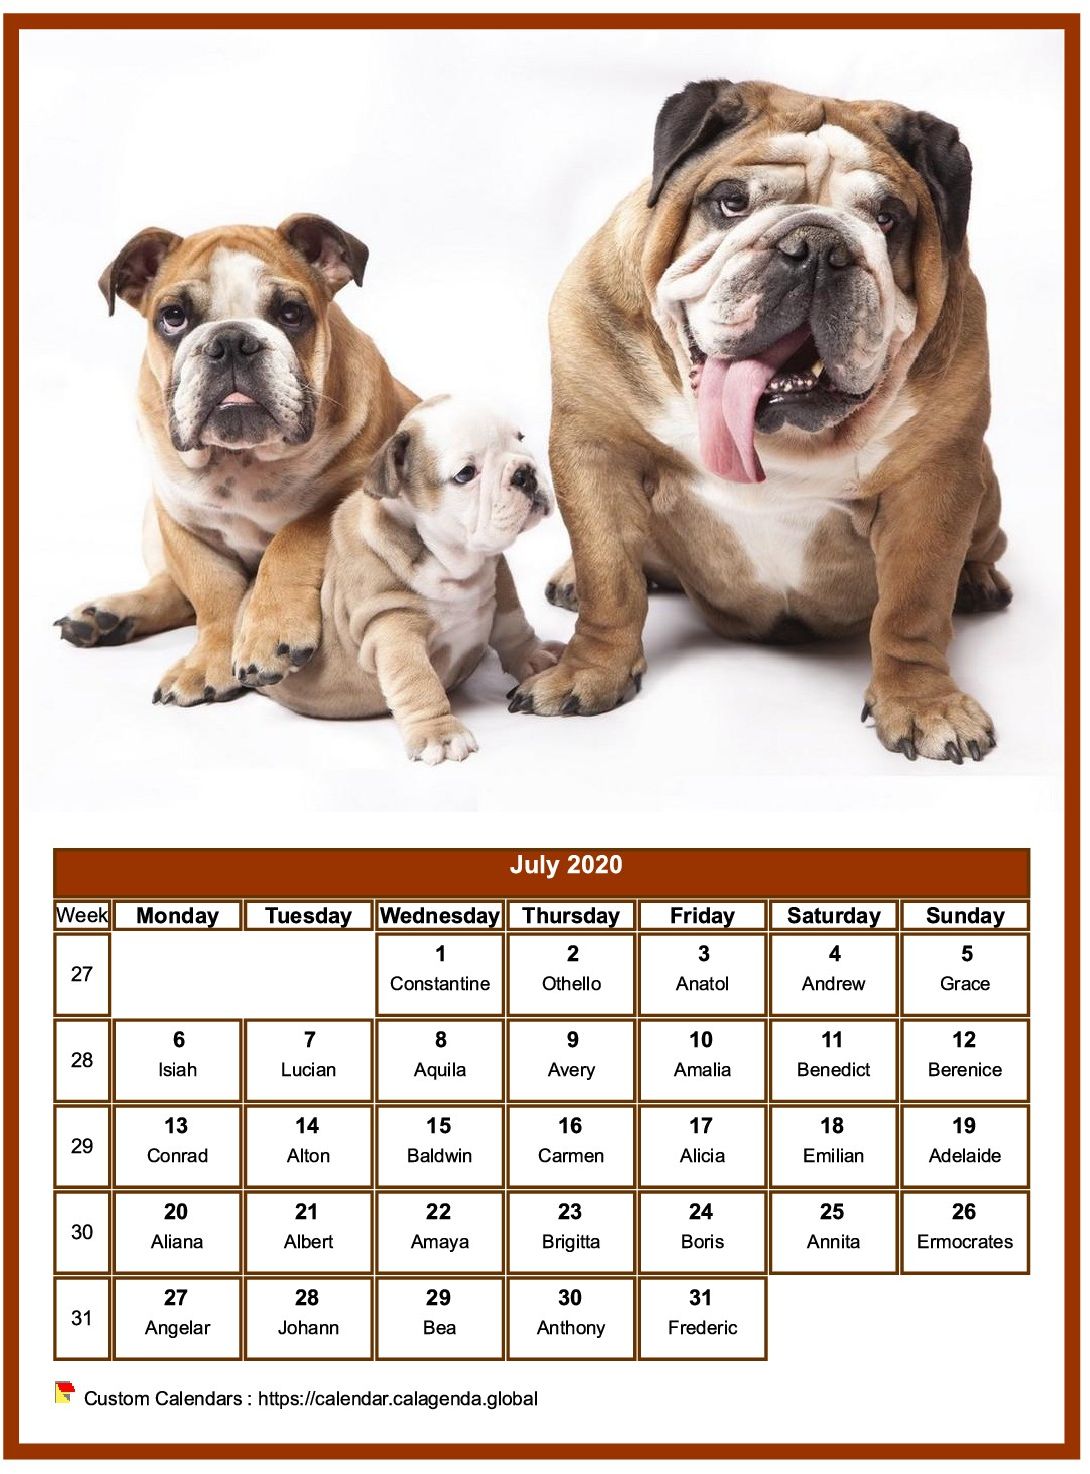 Calendar July 2020 dogs